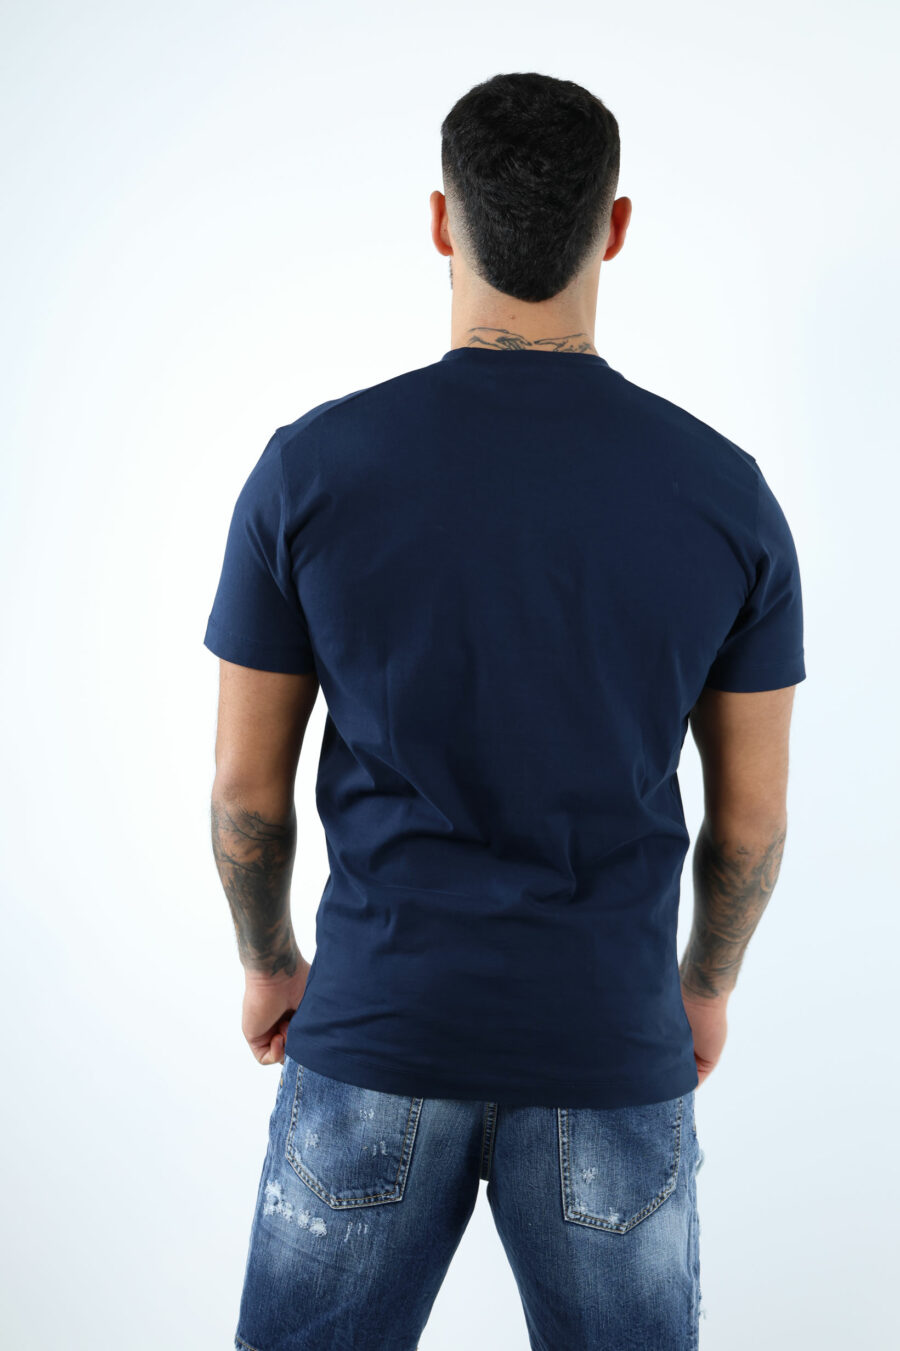 Dunkelblaues T-Shirt mit "ceresio 9, milano" Maxilogo - 106849